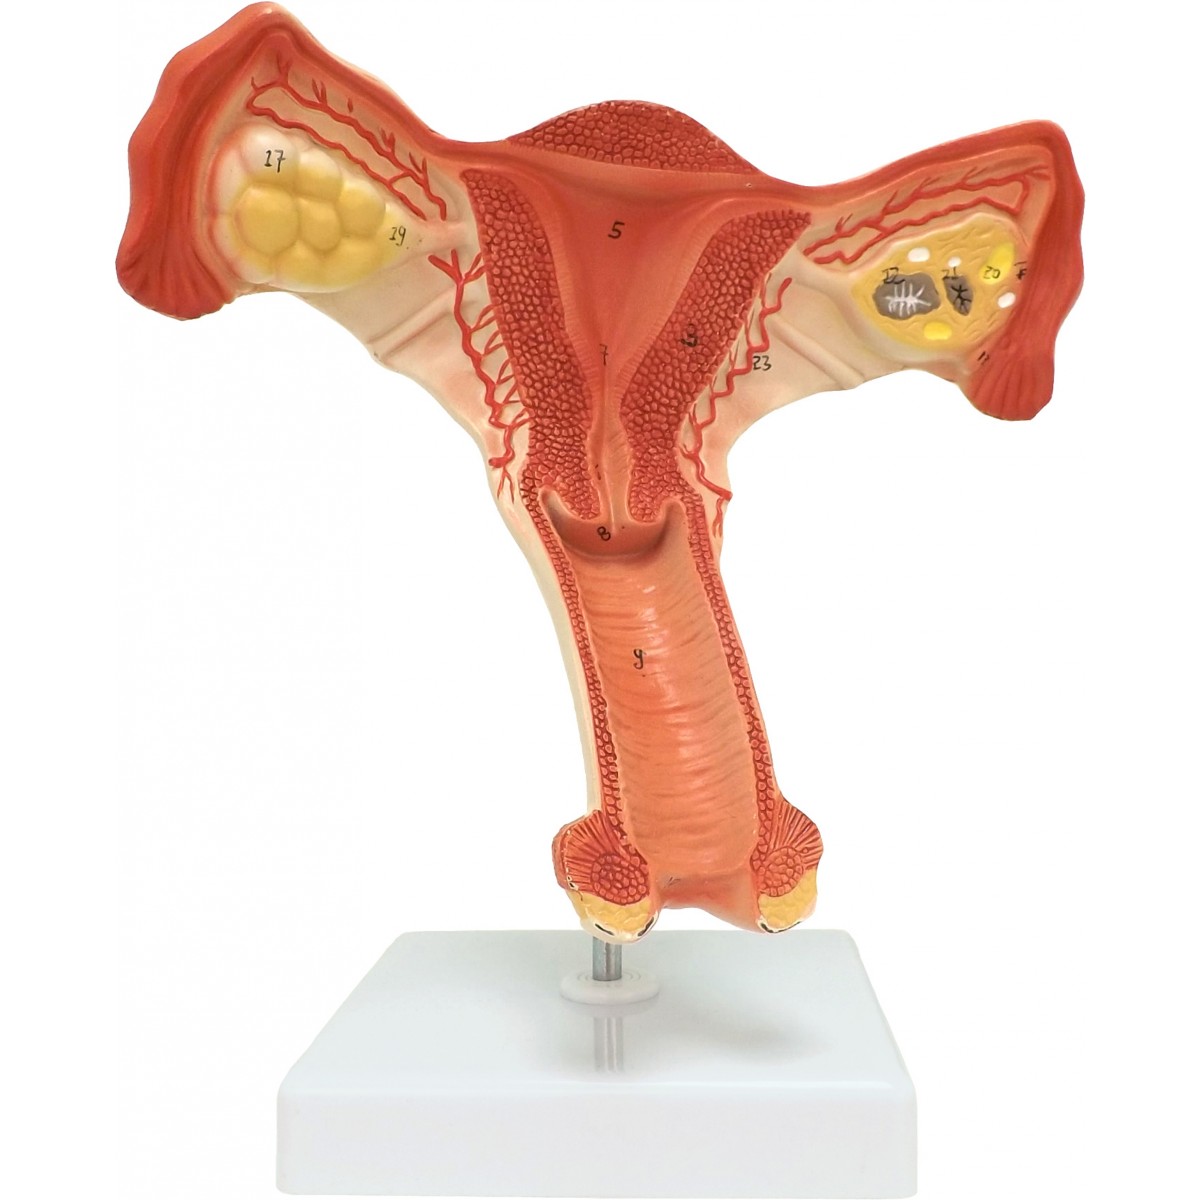 VAO464 Female Internal Organ - Reproductive System - Anatomical Models